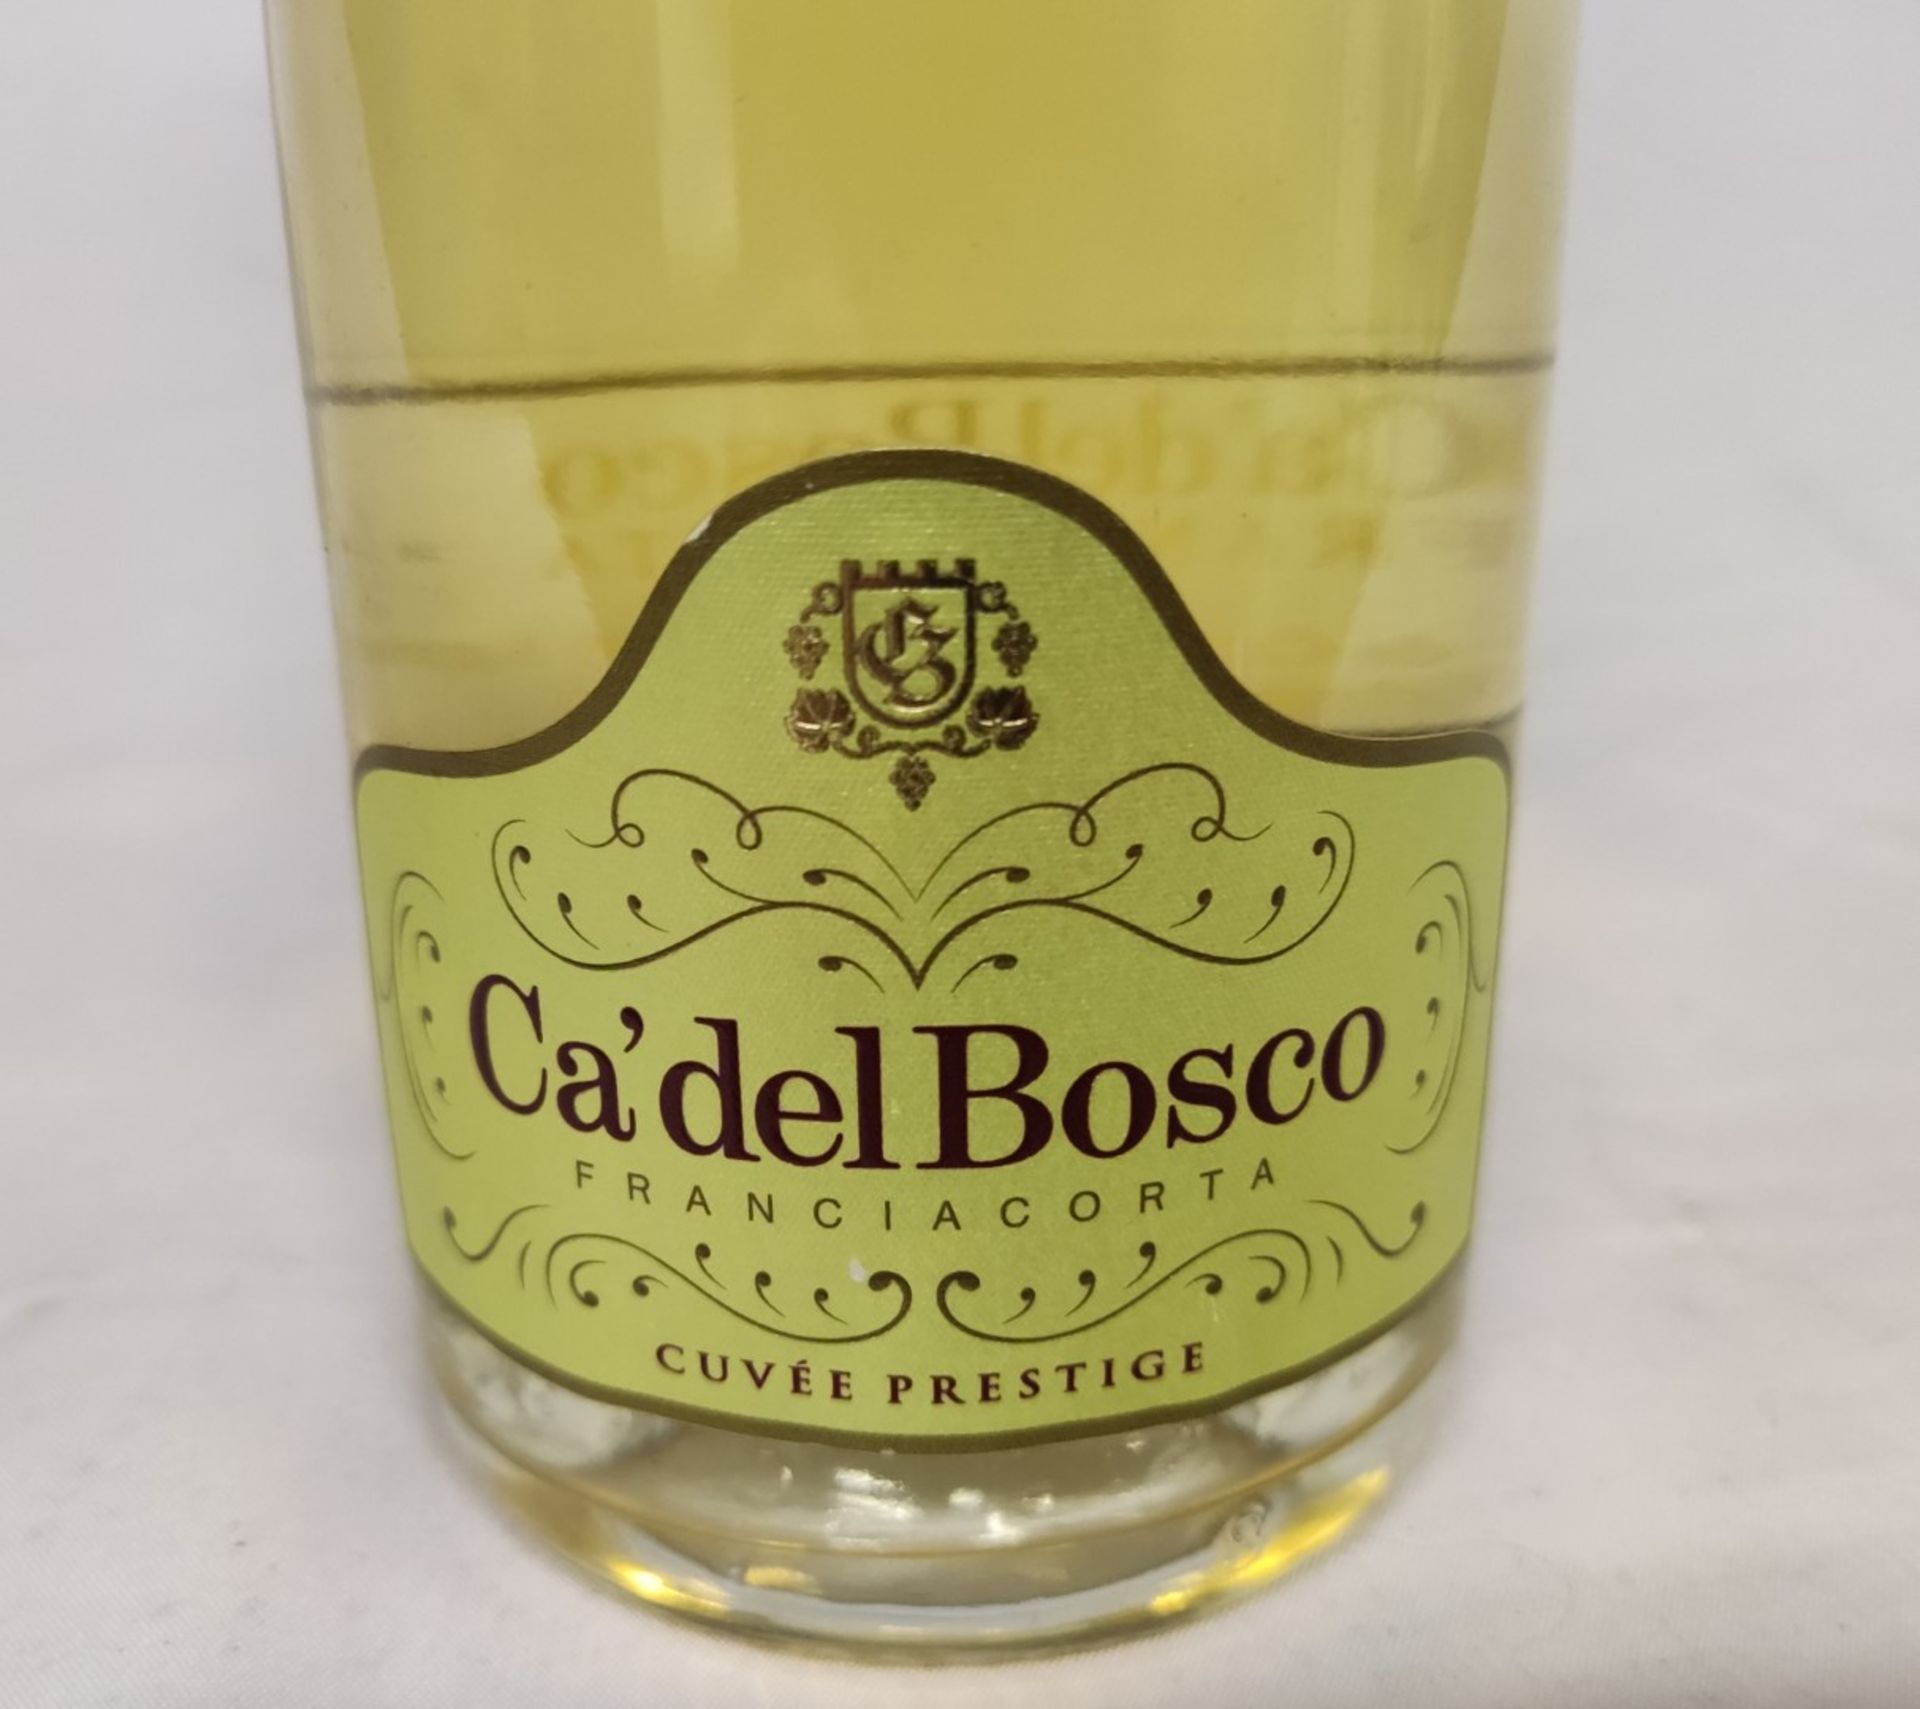 1 x Bottle of Ca' Del Bosco Cuvee Prestige - RRP £45 - 0.375l - Image 7 of 7